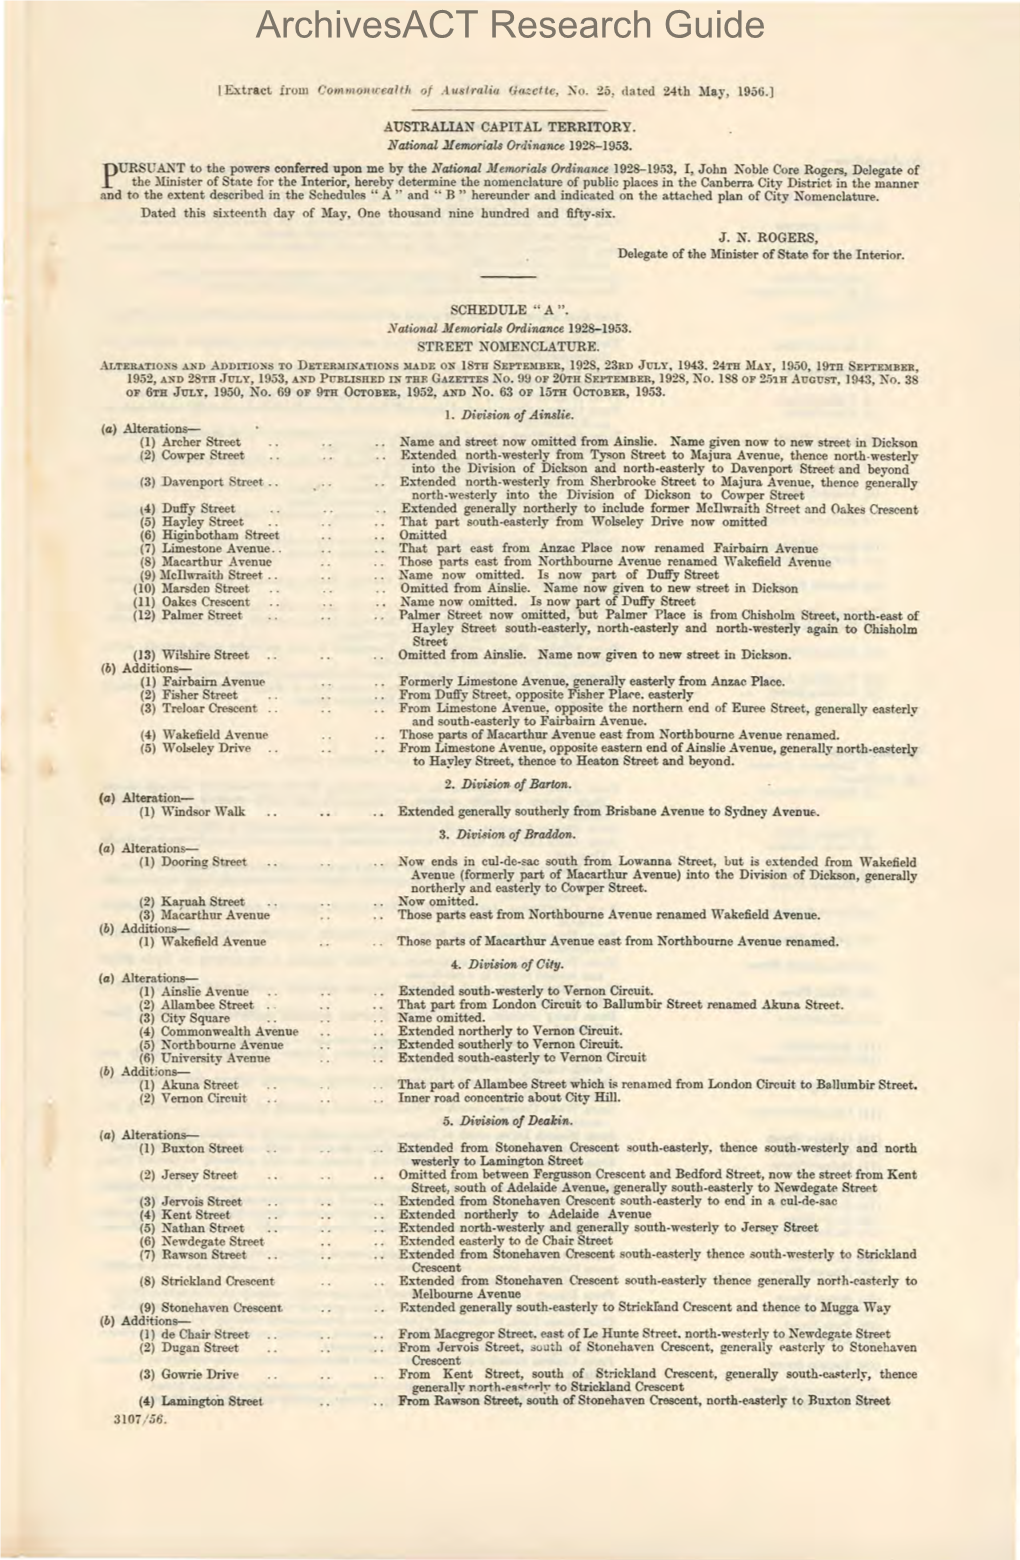 Australian Capital Territory National Memorials Ordinance 1928-1953